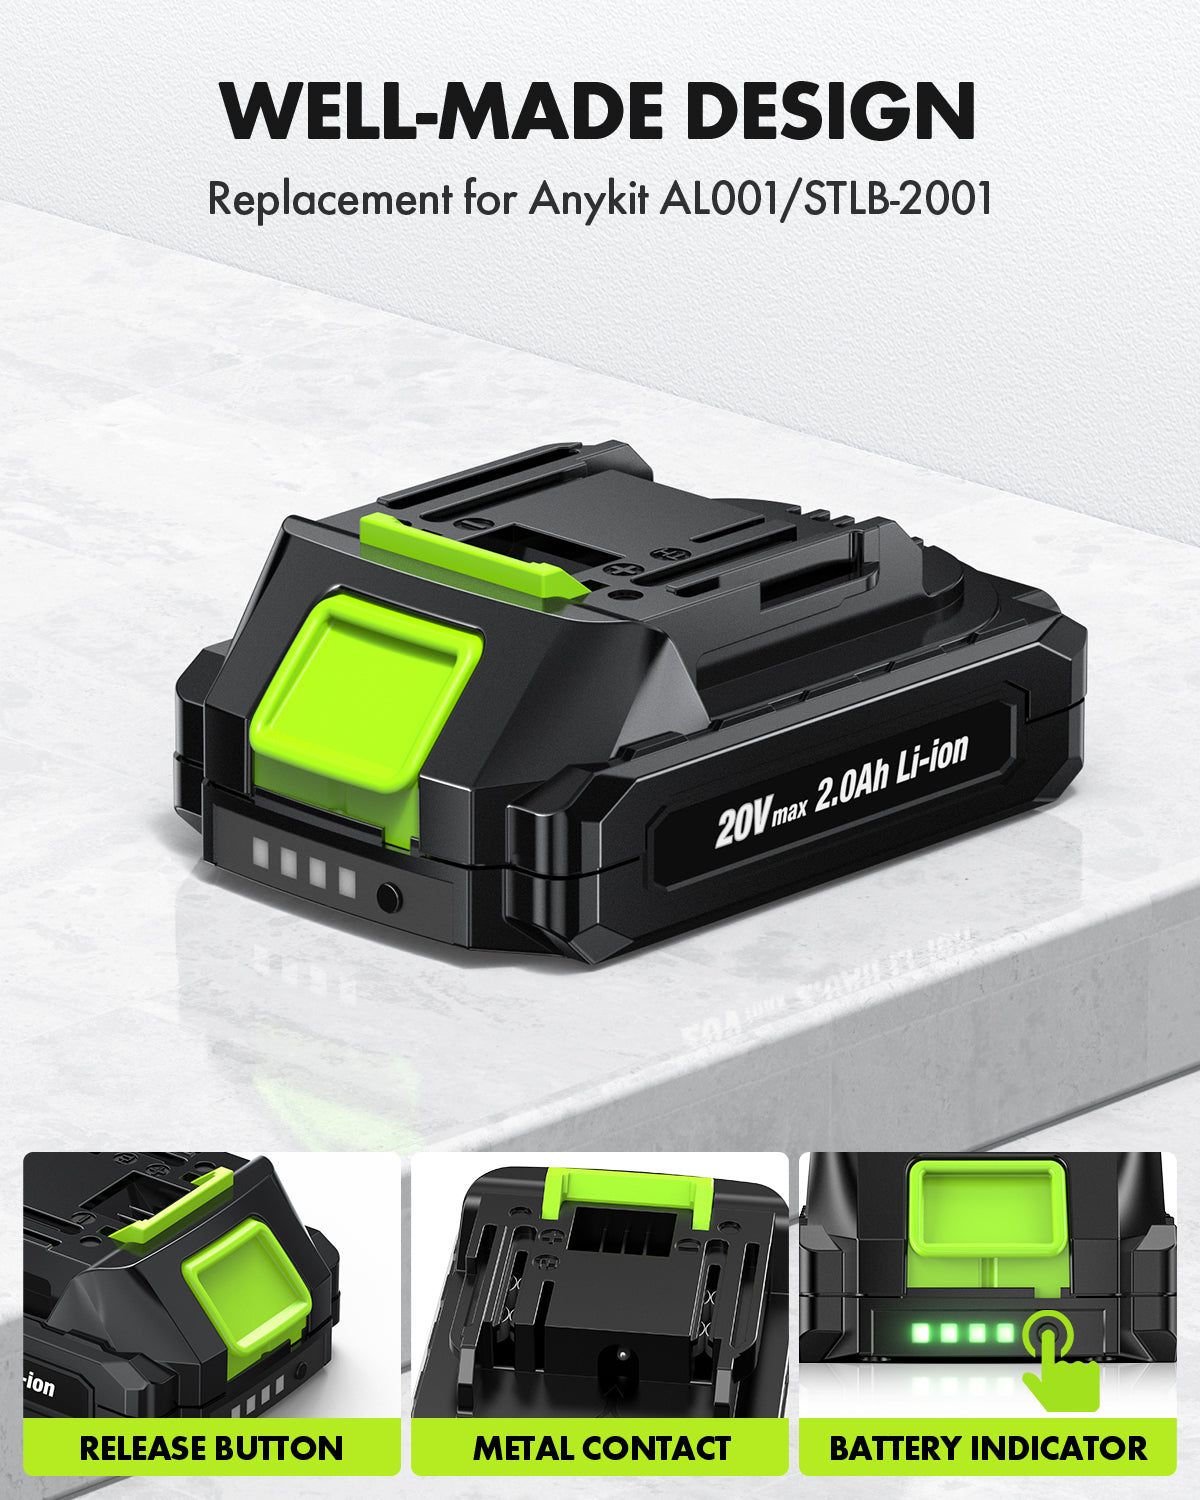 Anykit 2.0Ah AL001 Leaf Blower Battery